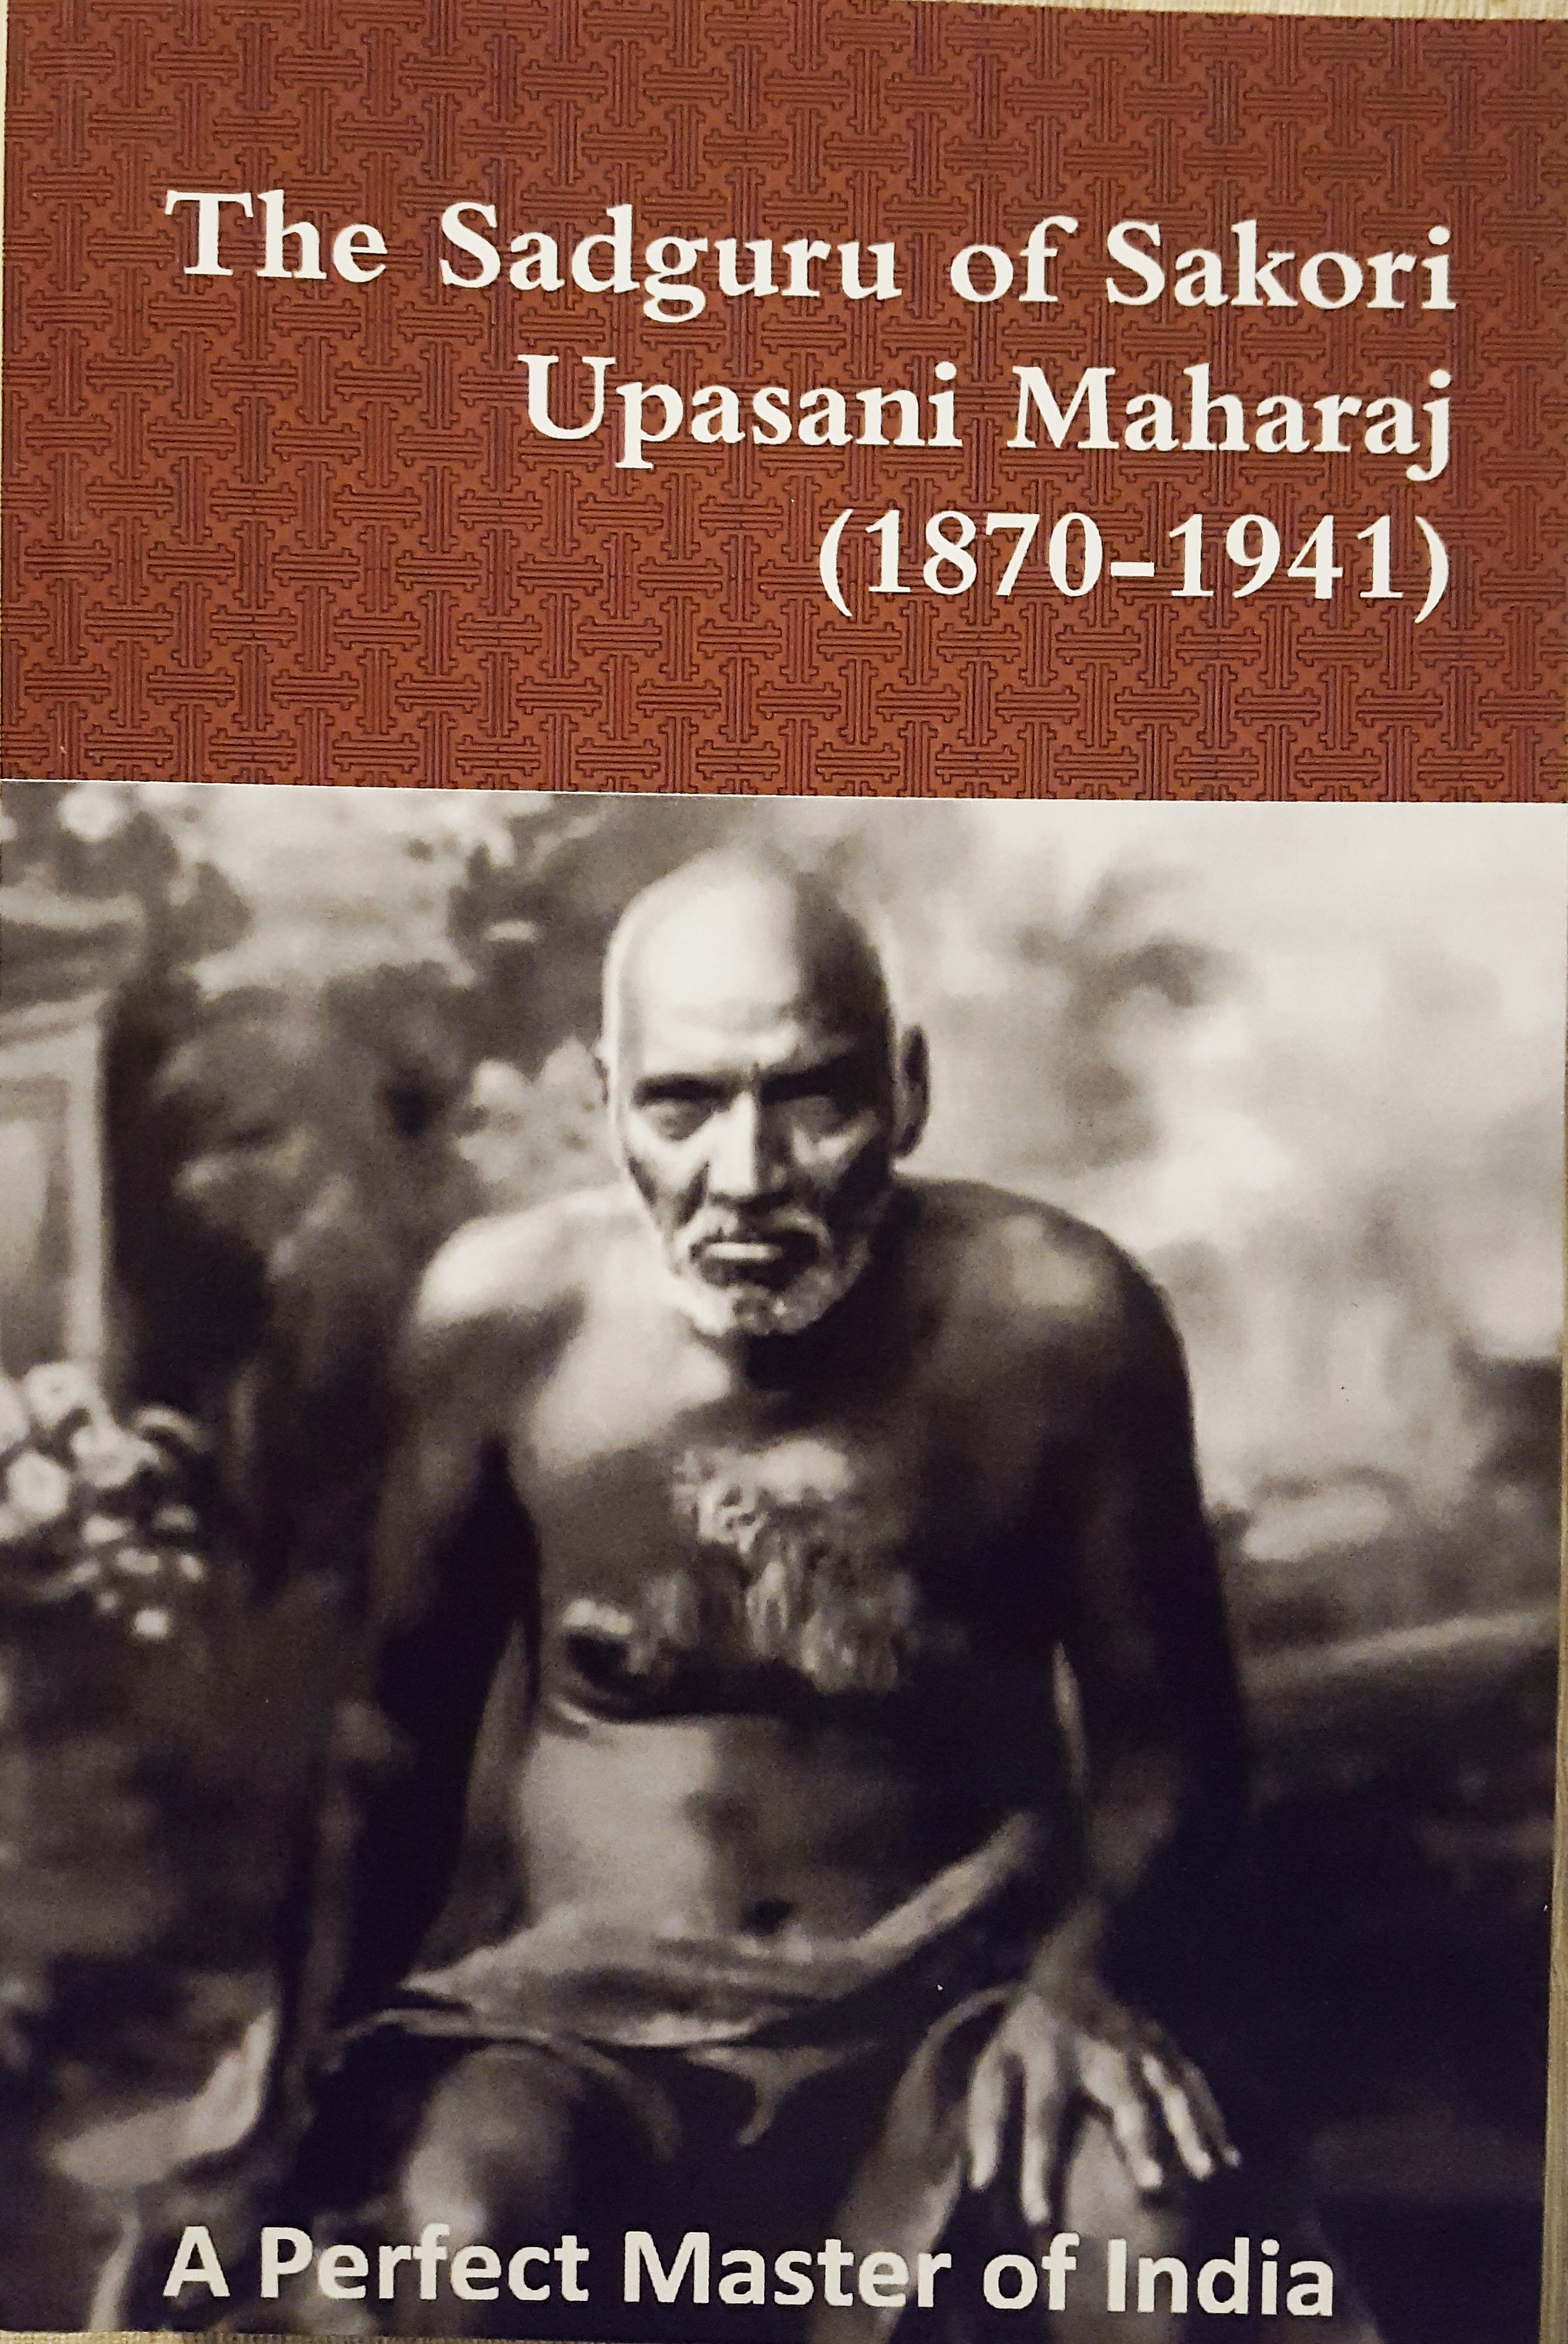 Shirdi Sai Baba Temple Frankfurt Germany (Deutschland) recommended book - The Sadguru of Sakori - Upasani Maharaj .